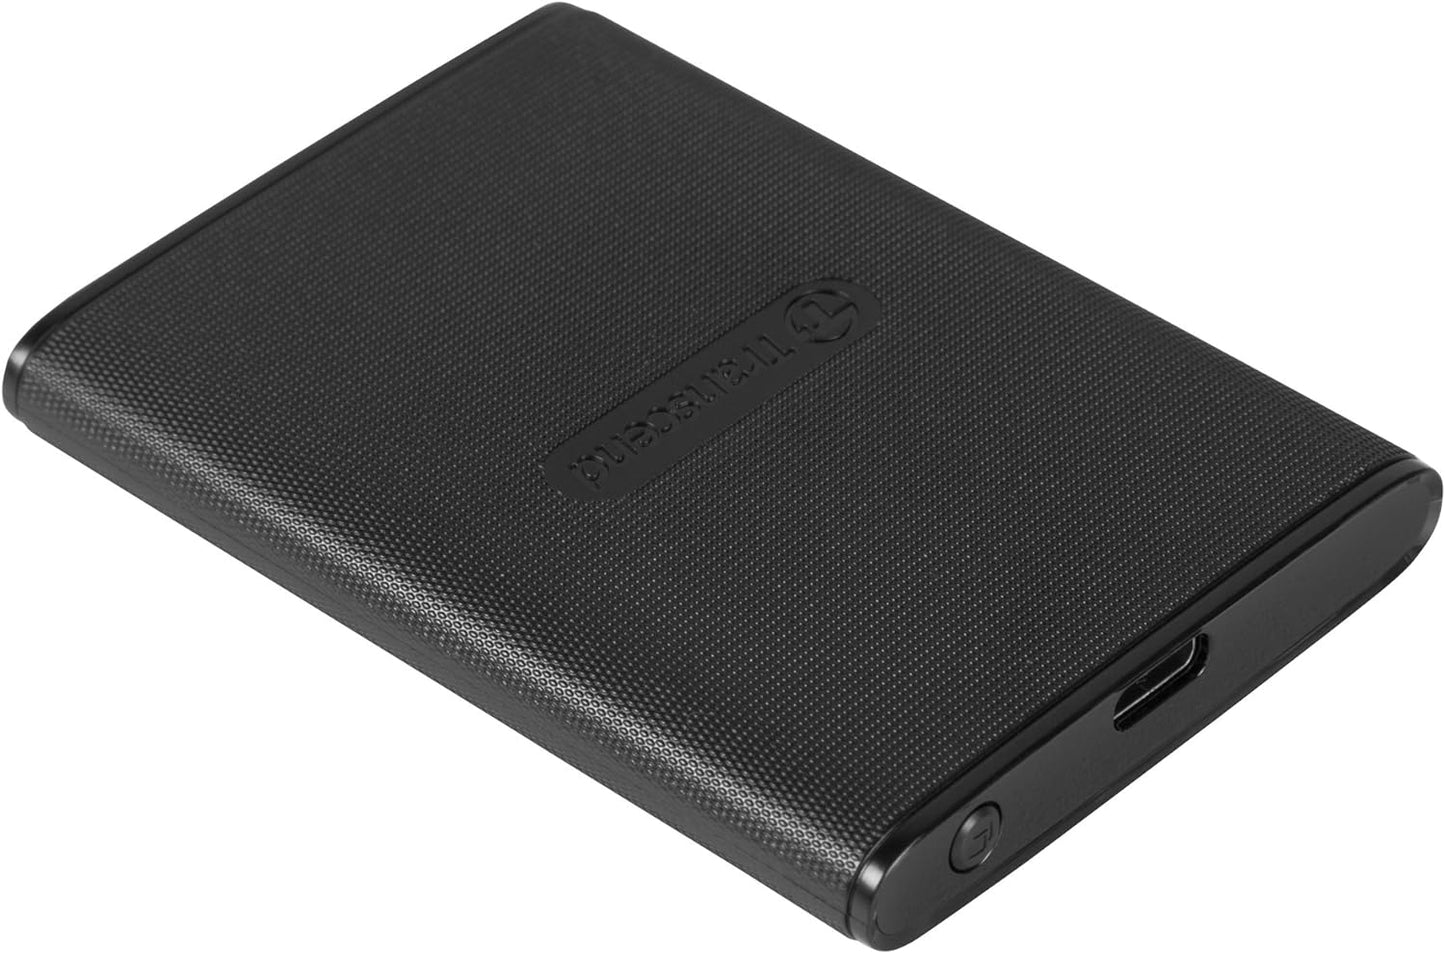 Transcend 500GB USB 3.1 USB Type-C Portable SSD External Hard Drive (Brand New)